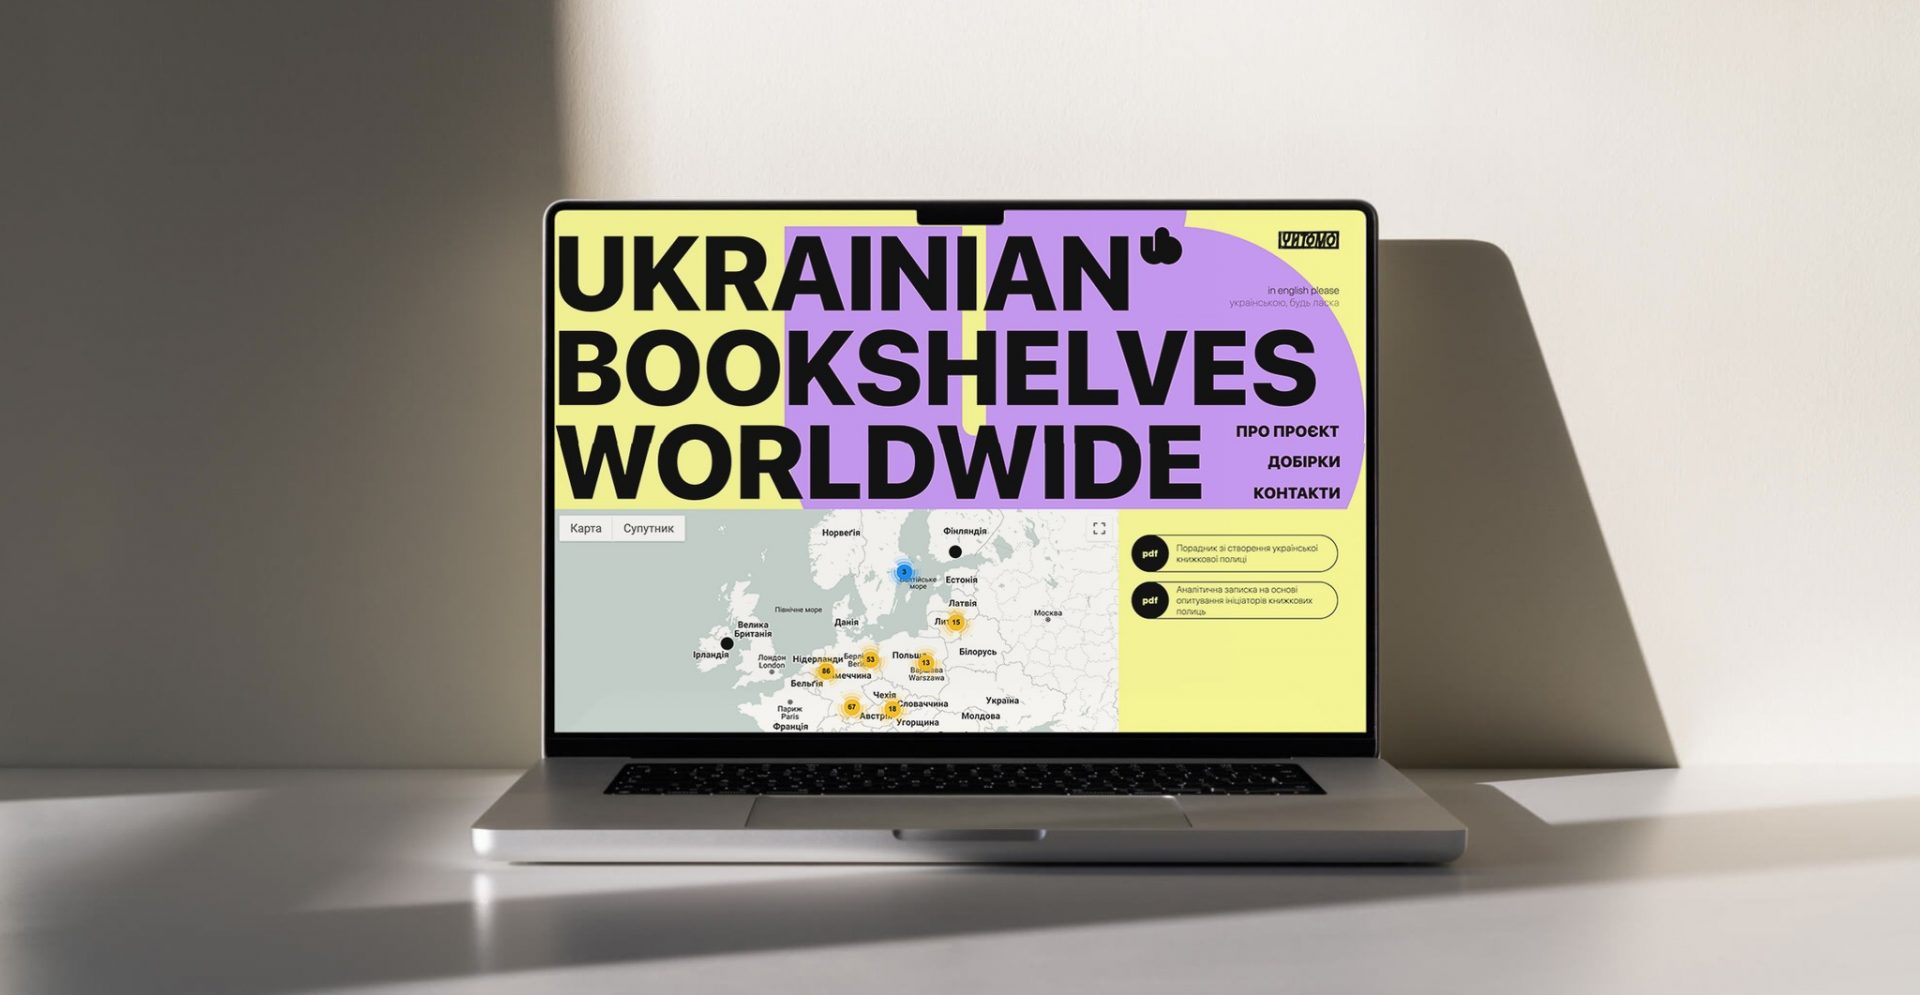 Ukrainian Bookshelves Worldwide